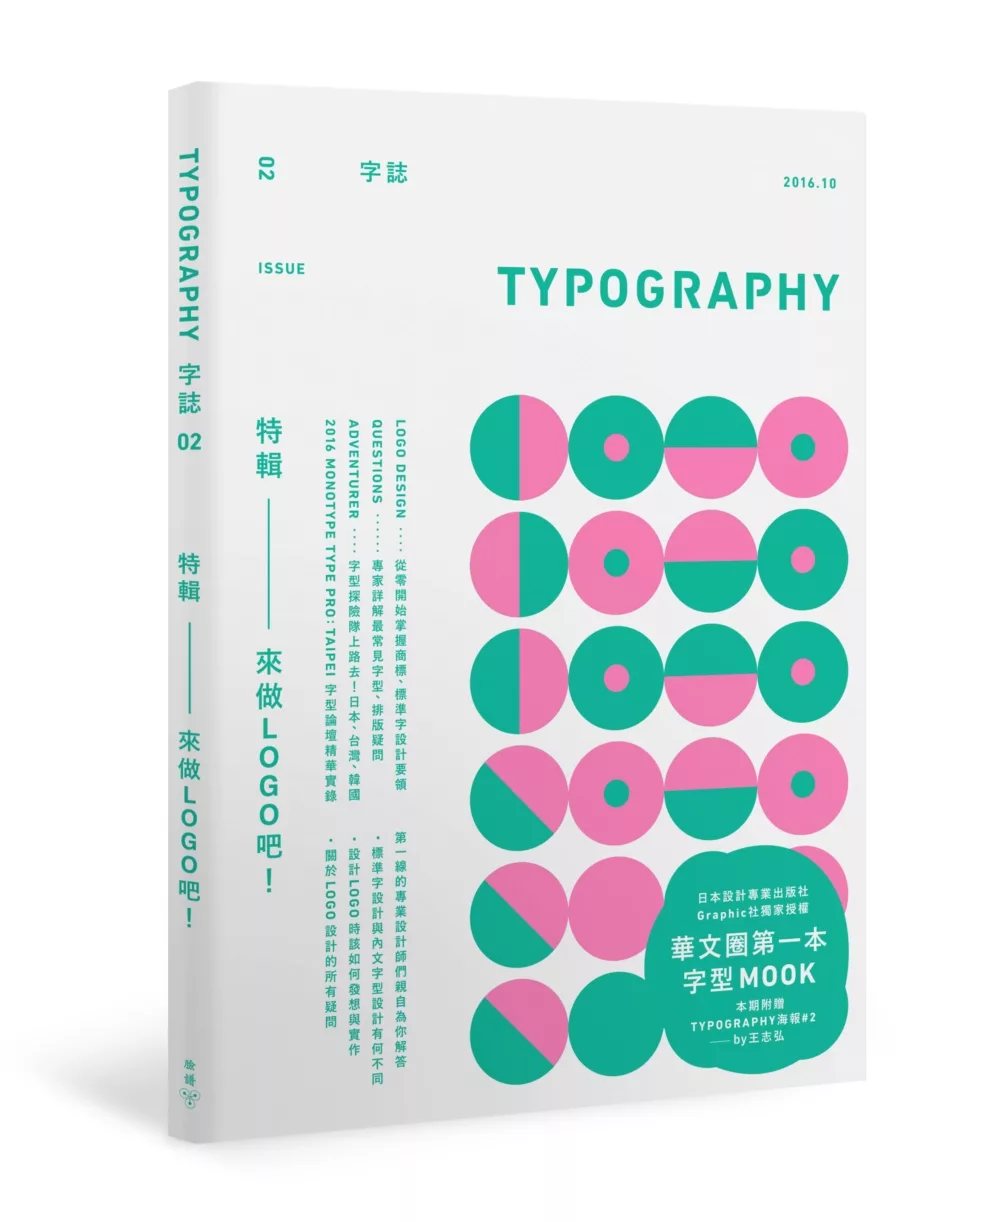 Typography 字誌：Issue 02 來做LOGO吧！